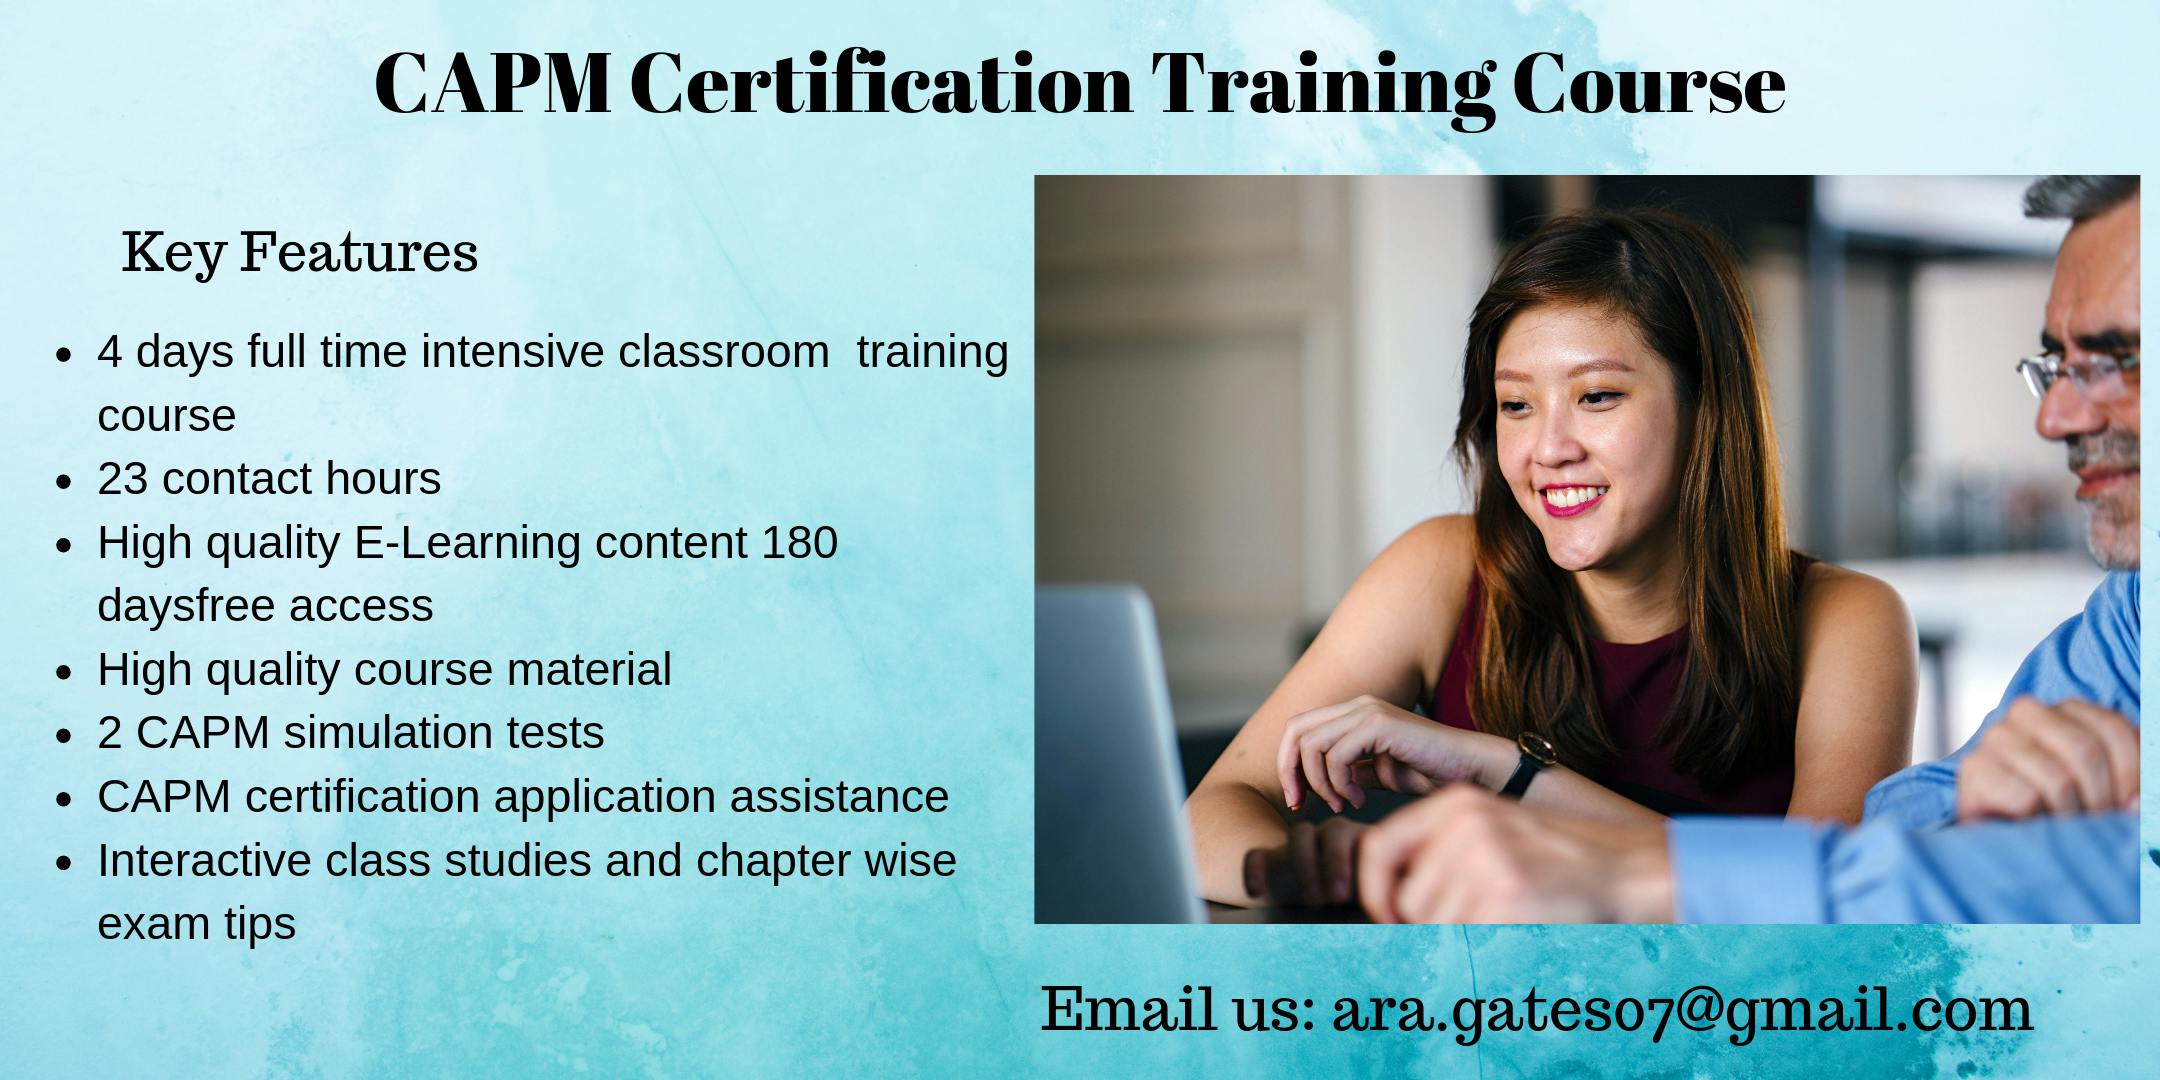 CAPM Certification Course in Denver, CO